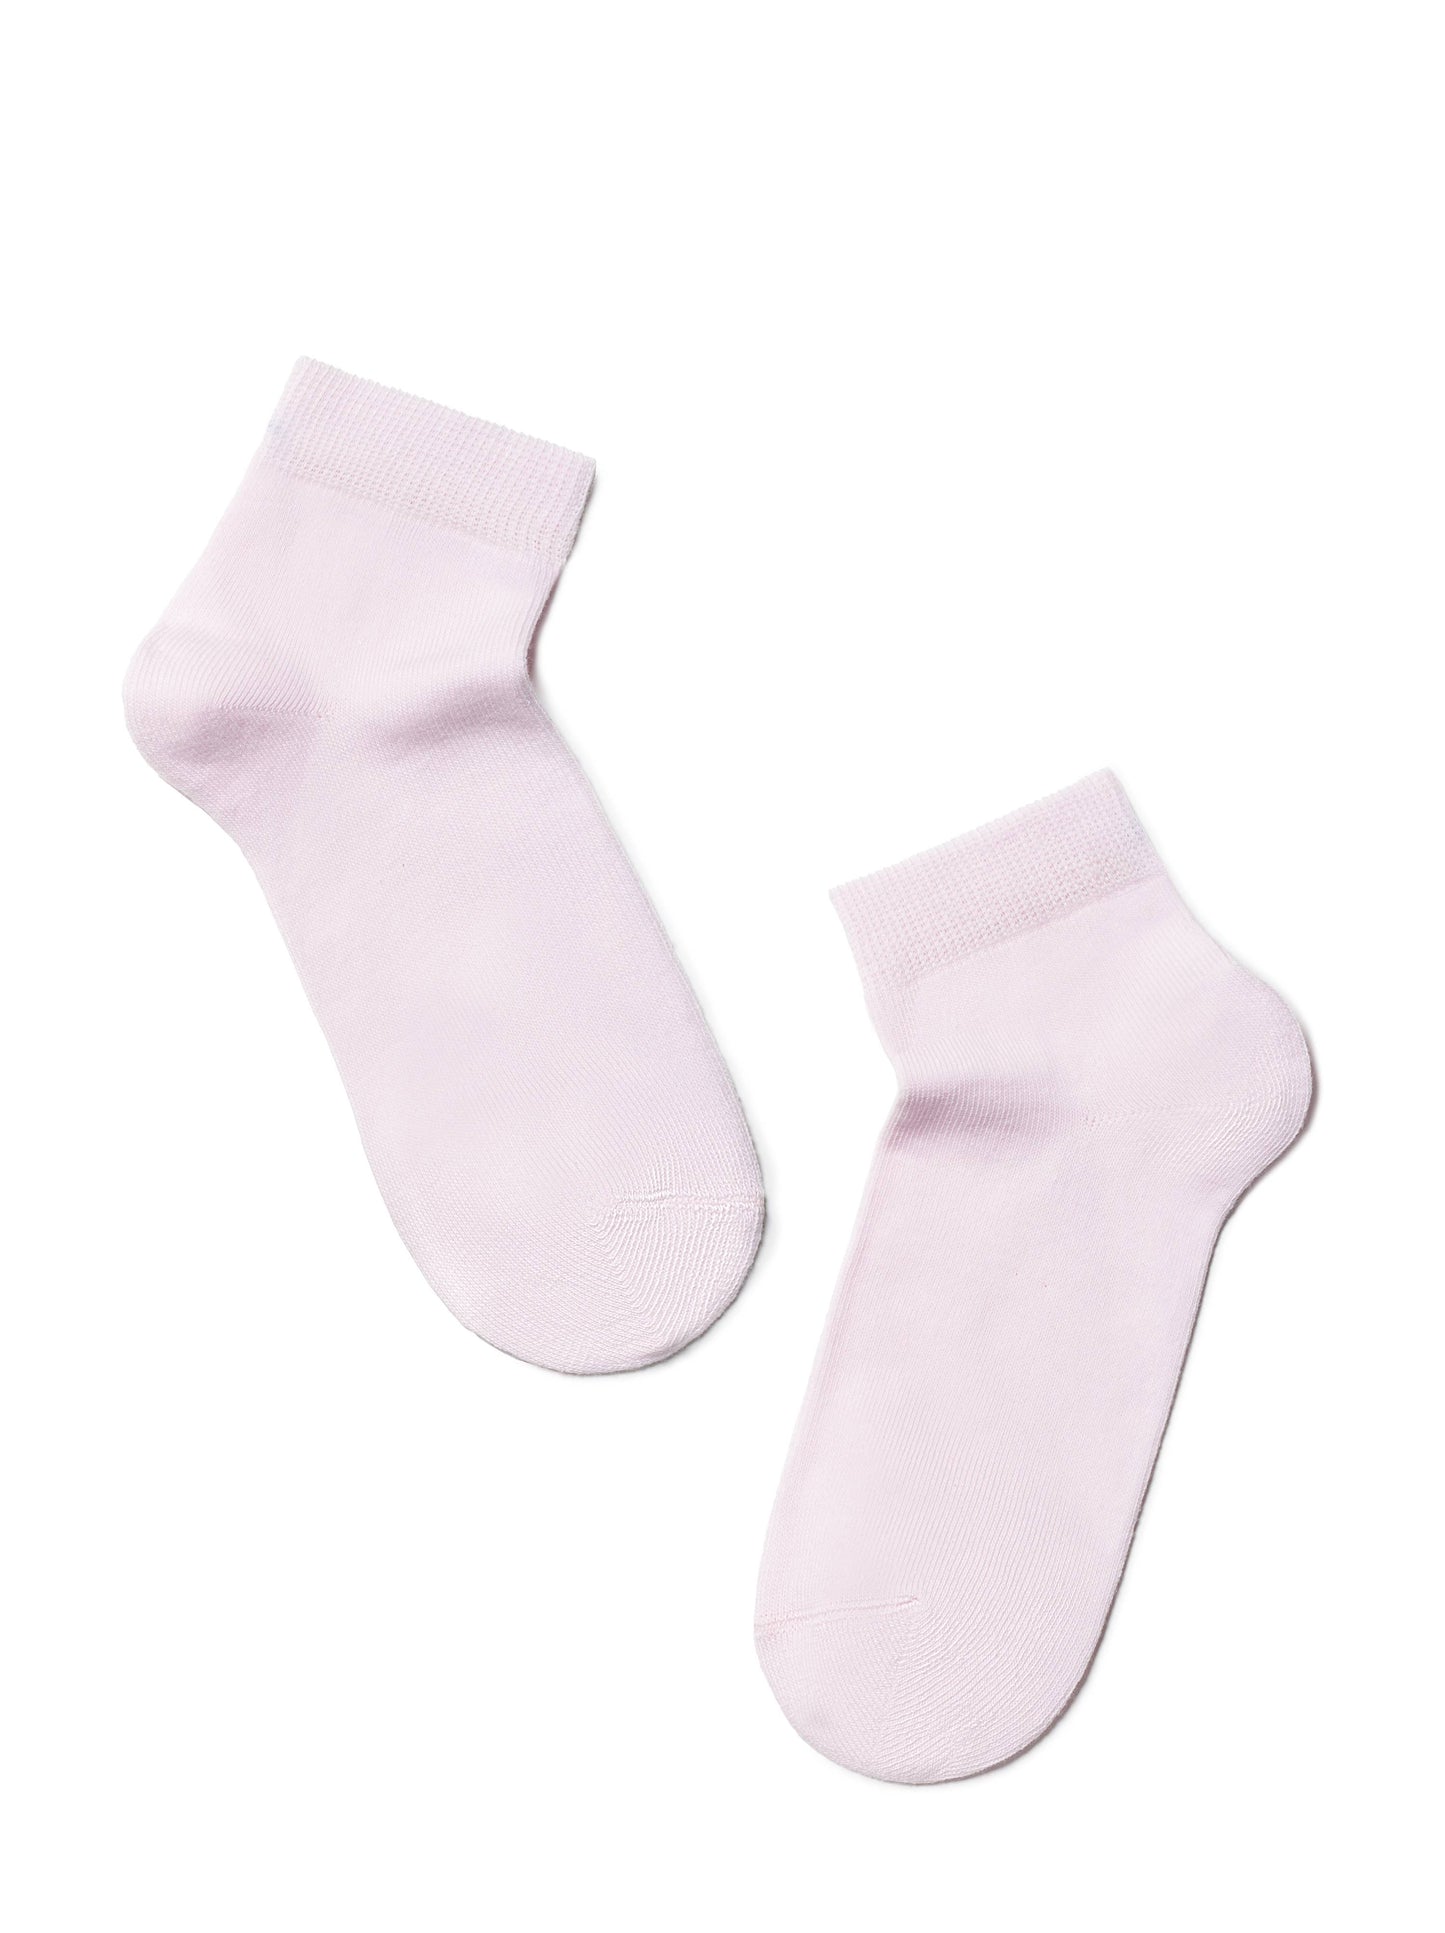 Conte Esli #19С-143СПЕ(000) - Lot of 2 pairs Cotton Socks For Boys & Girls